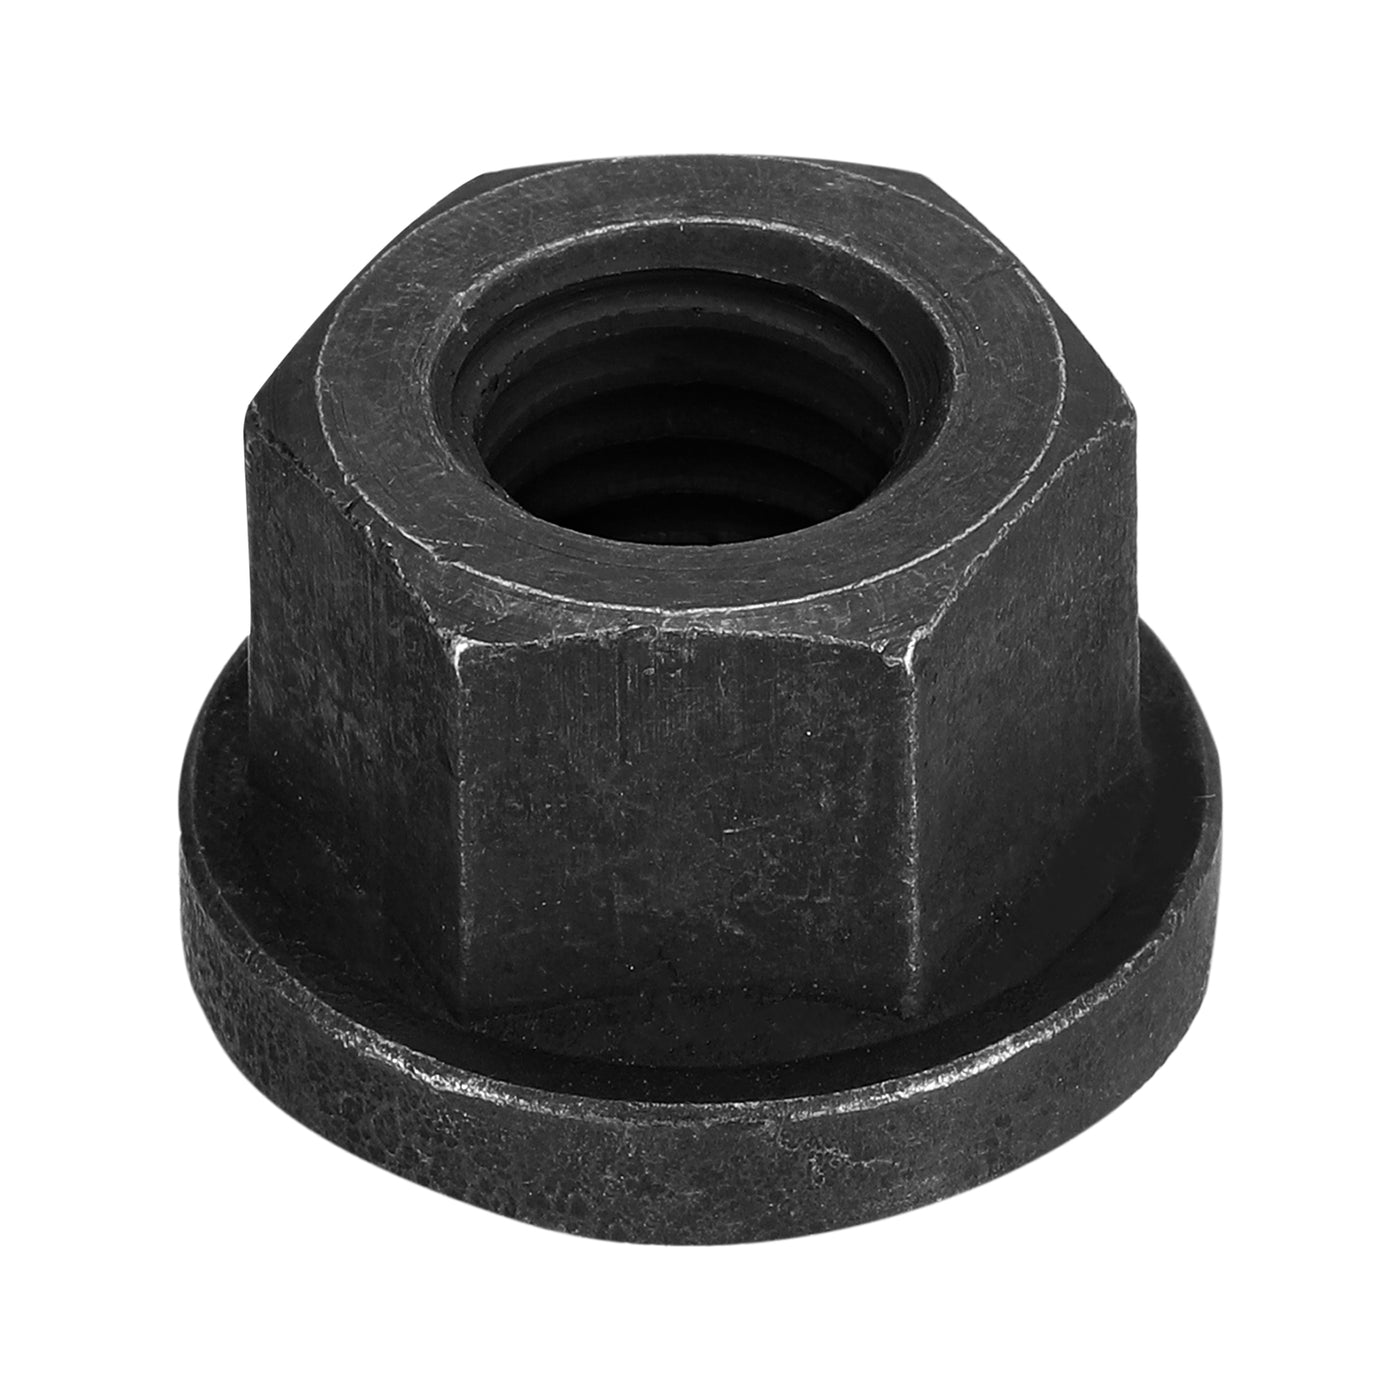 uxcell Uxcell 5/8-11 Flange Hex Lock Nut, Grade 10.9 Carbon Steel Hex Flange Nut